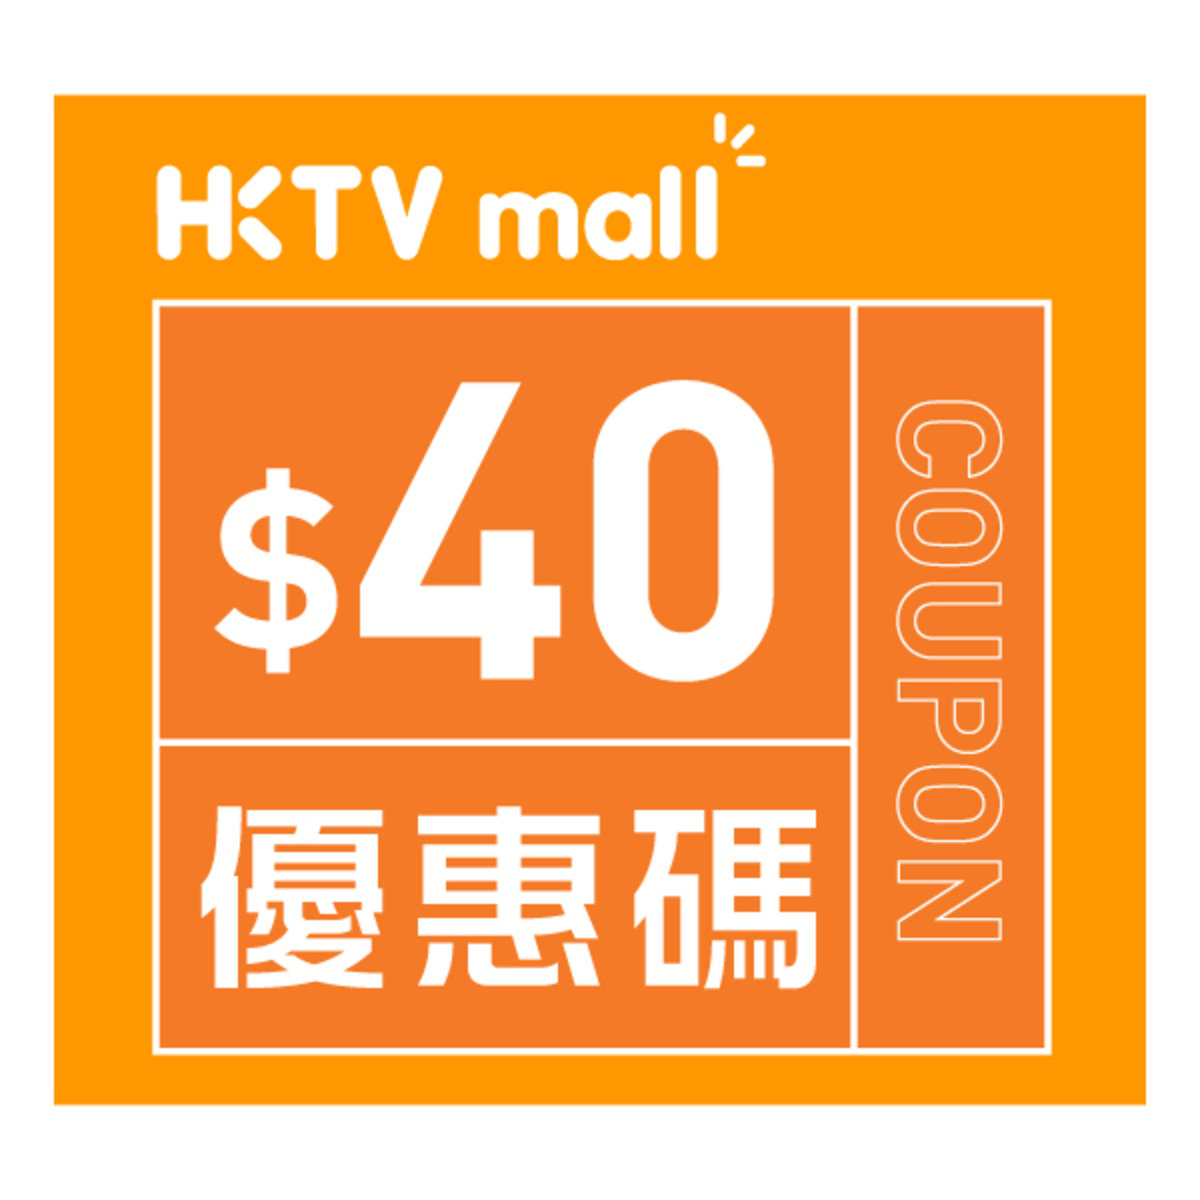 HKTVMall $40購物優惠券 [有效日期：2019.01.04 - 2019.02.28]